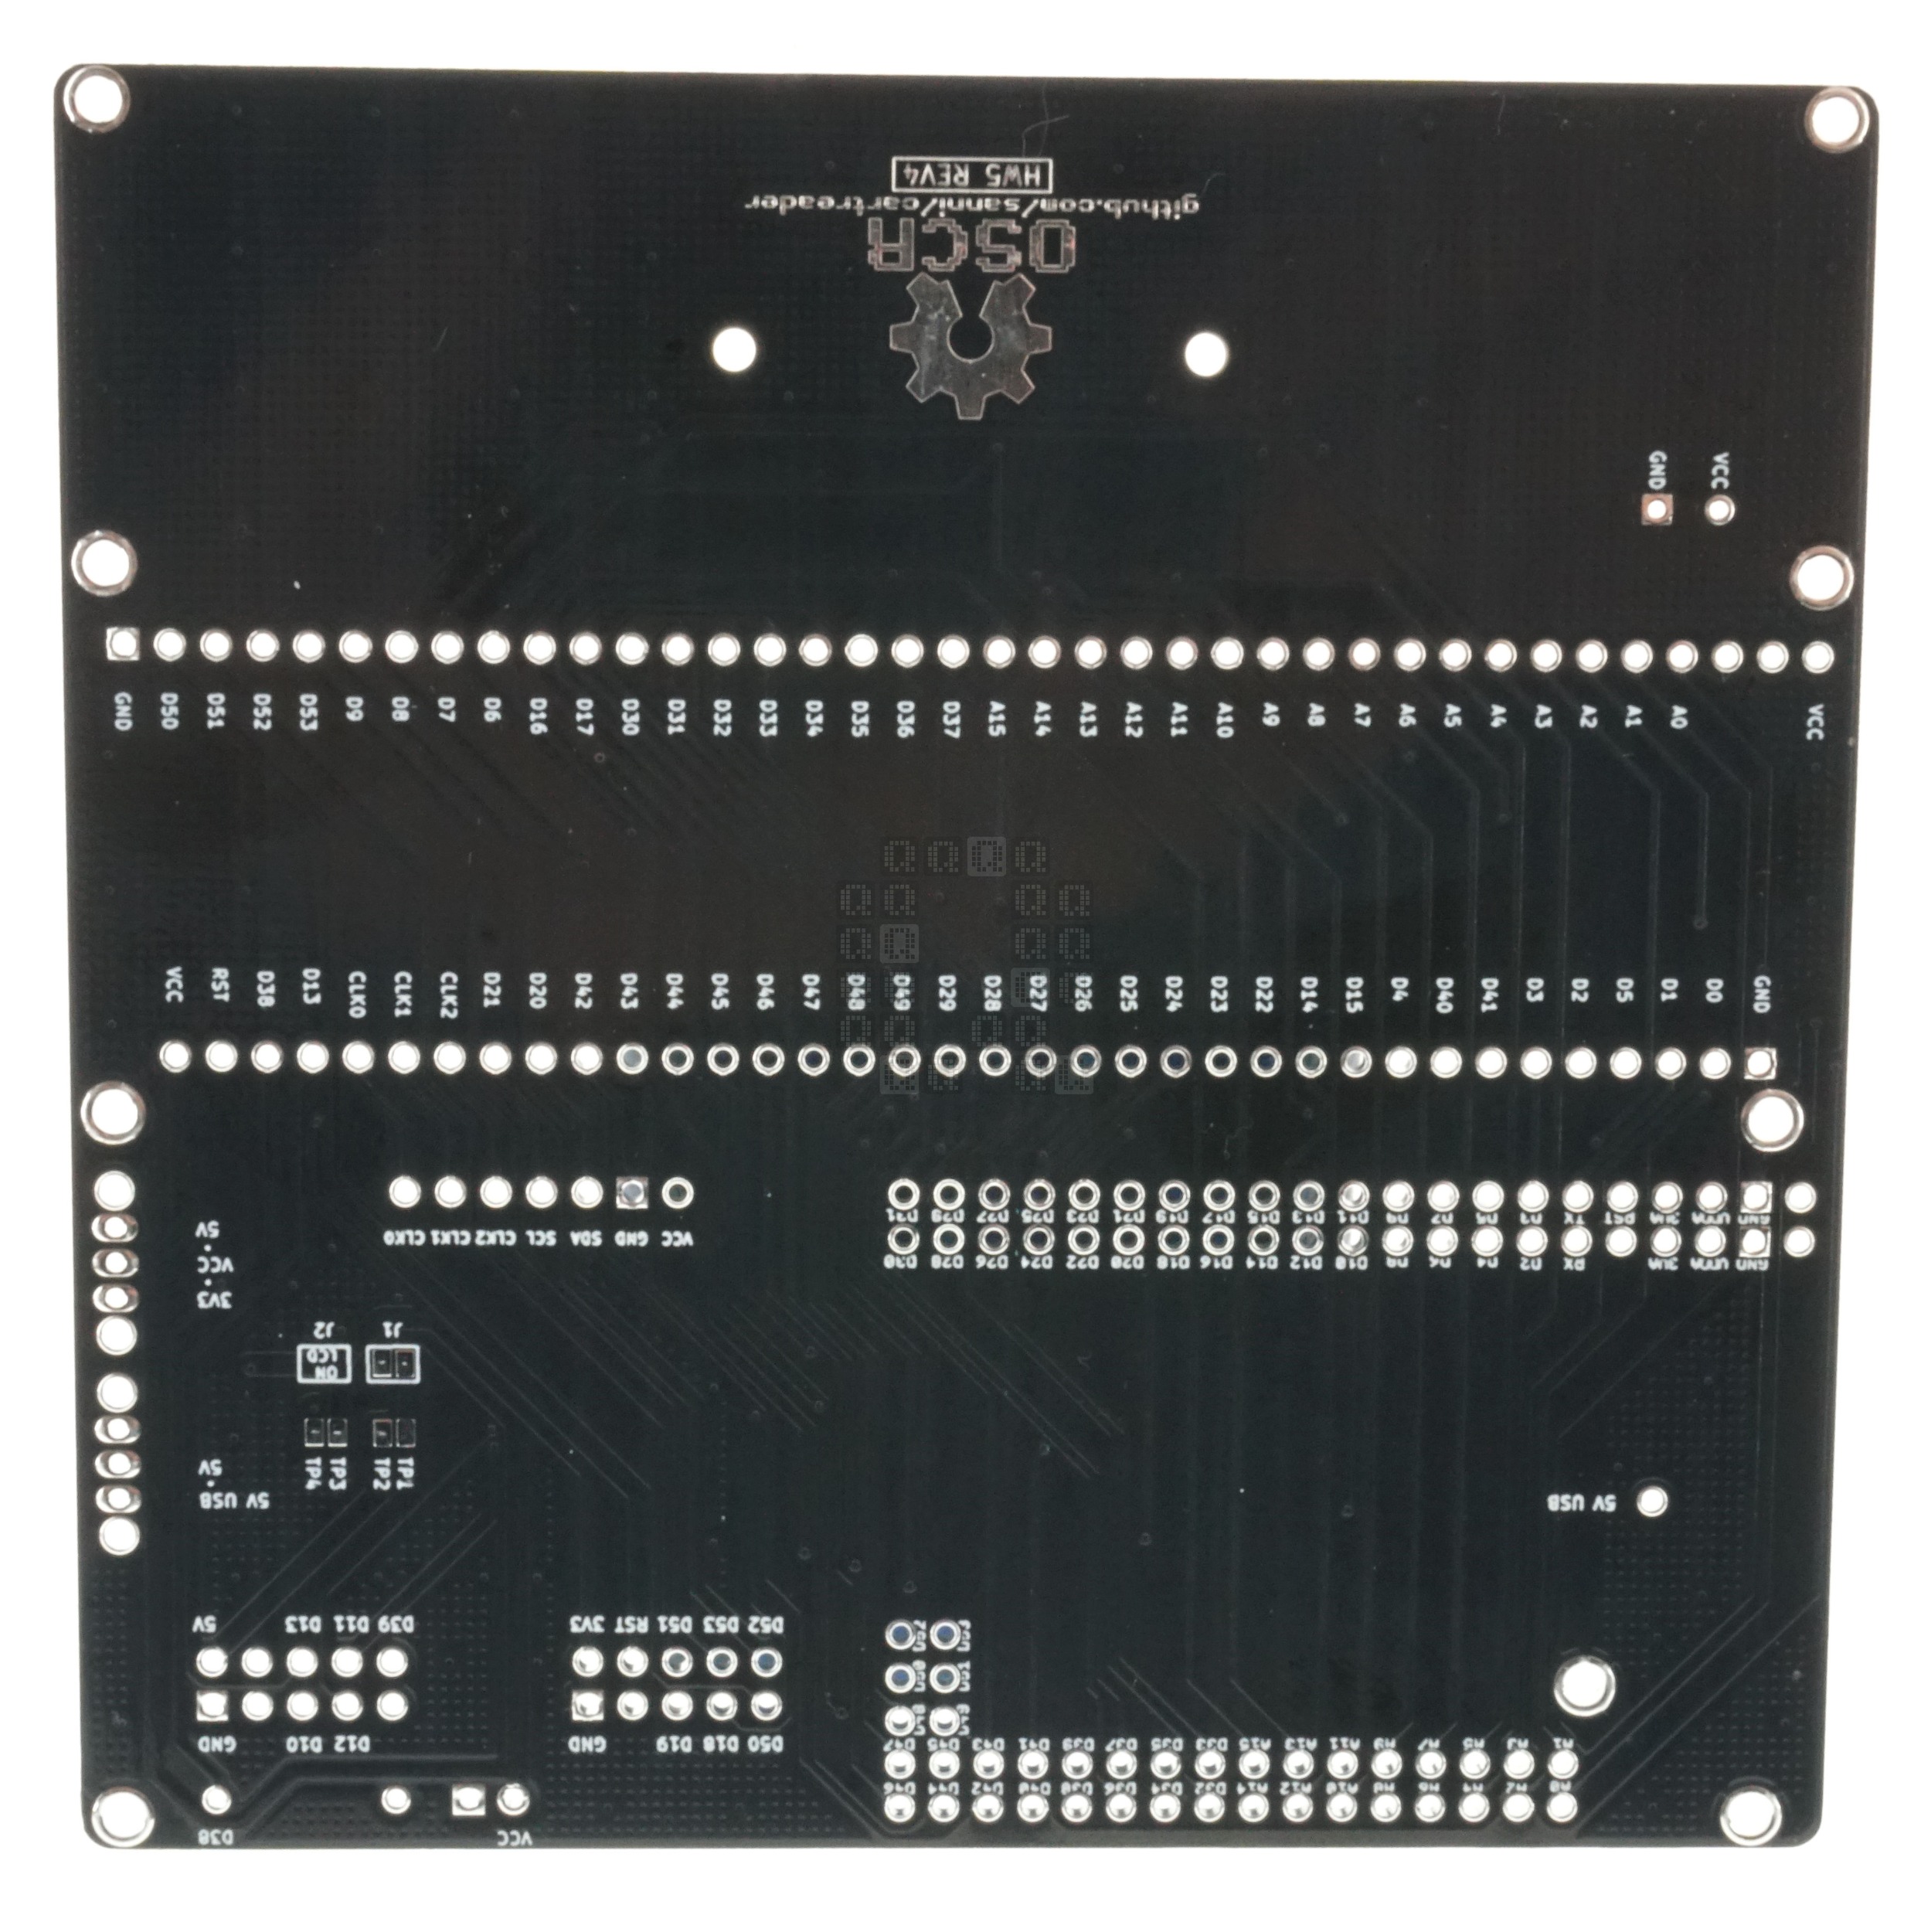 2cm x 8cm Green PCB Printed Circuit Board, 5 Pack, 168 Through